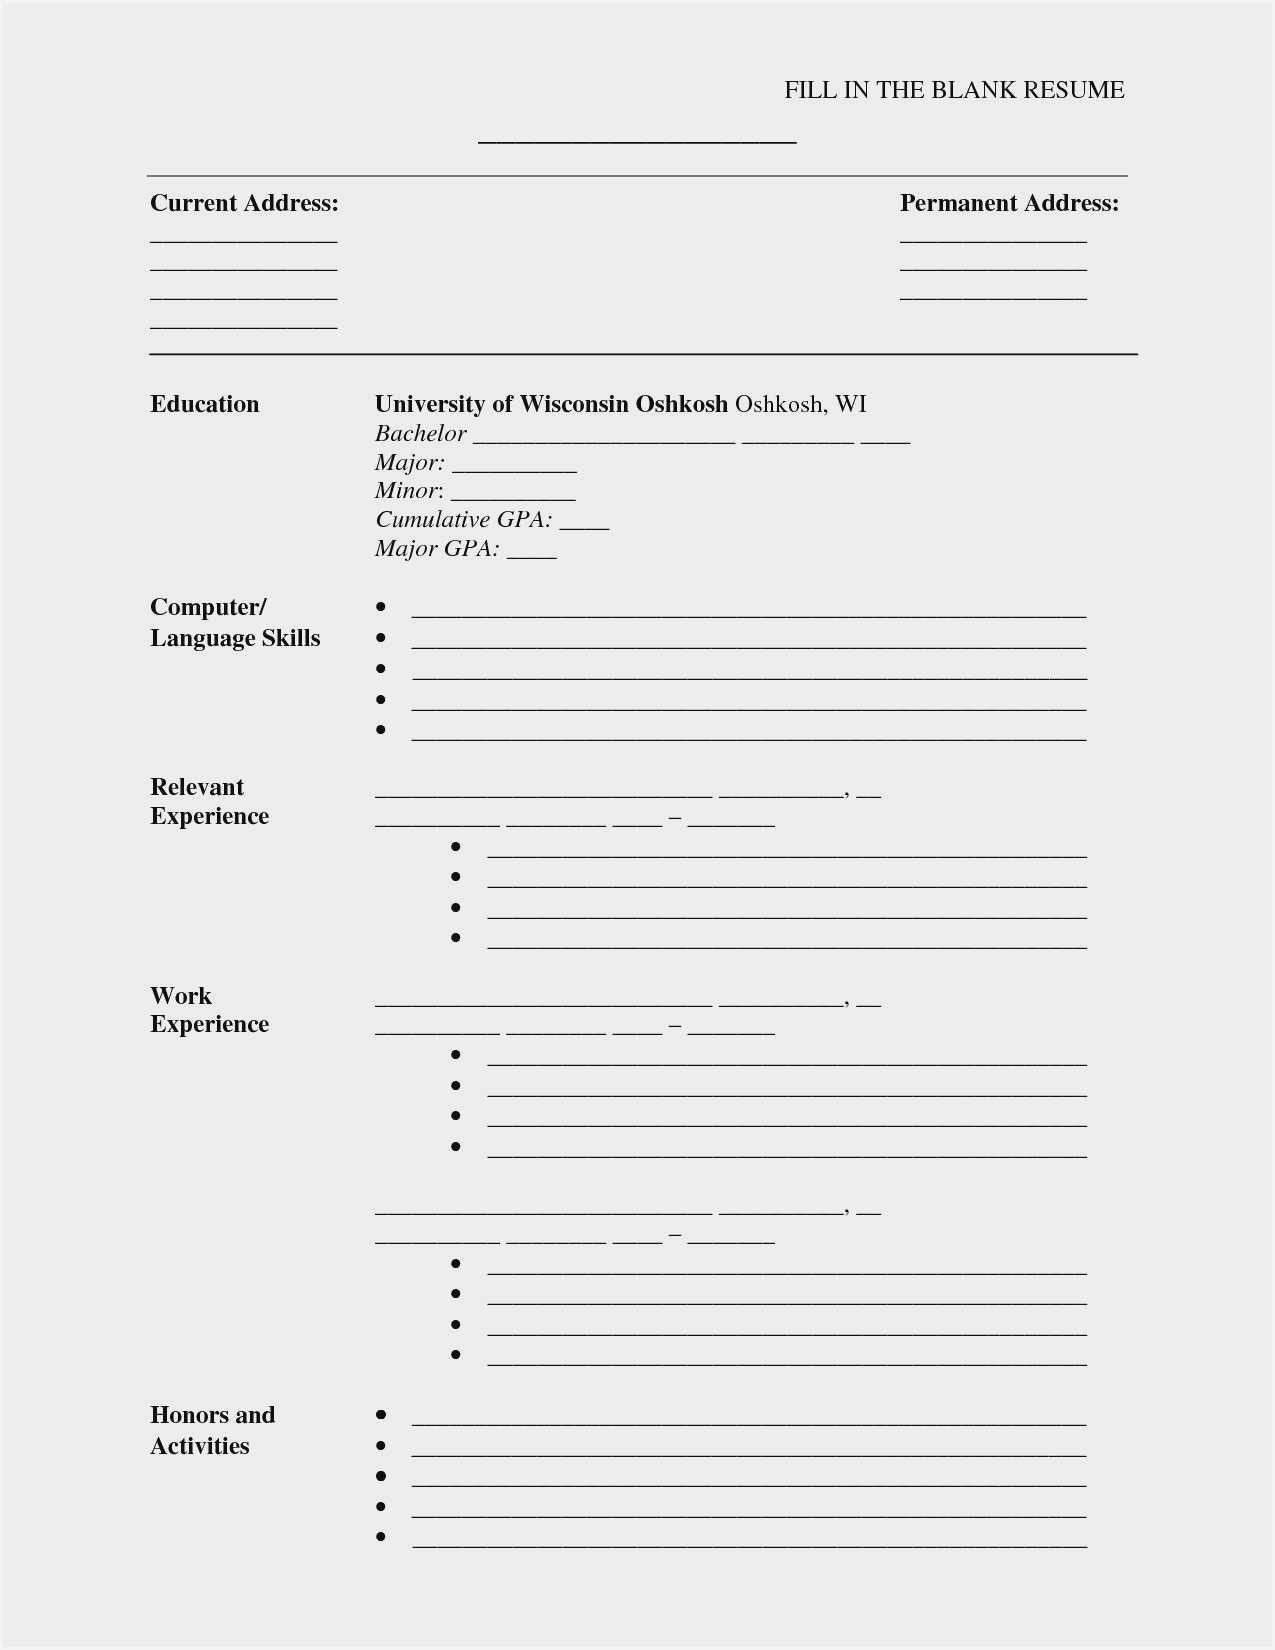 Blank Cv Format Word Download - Resume : Resume Sample #3945 In Free Blank Cv Template Download